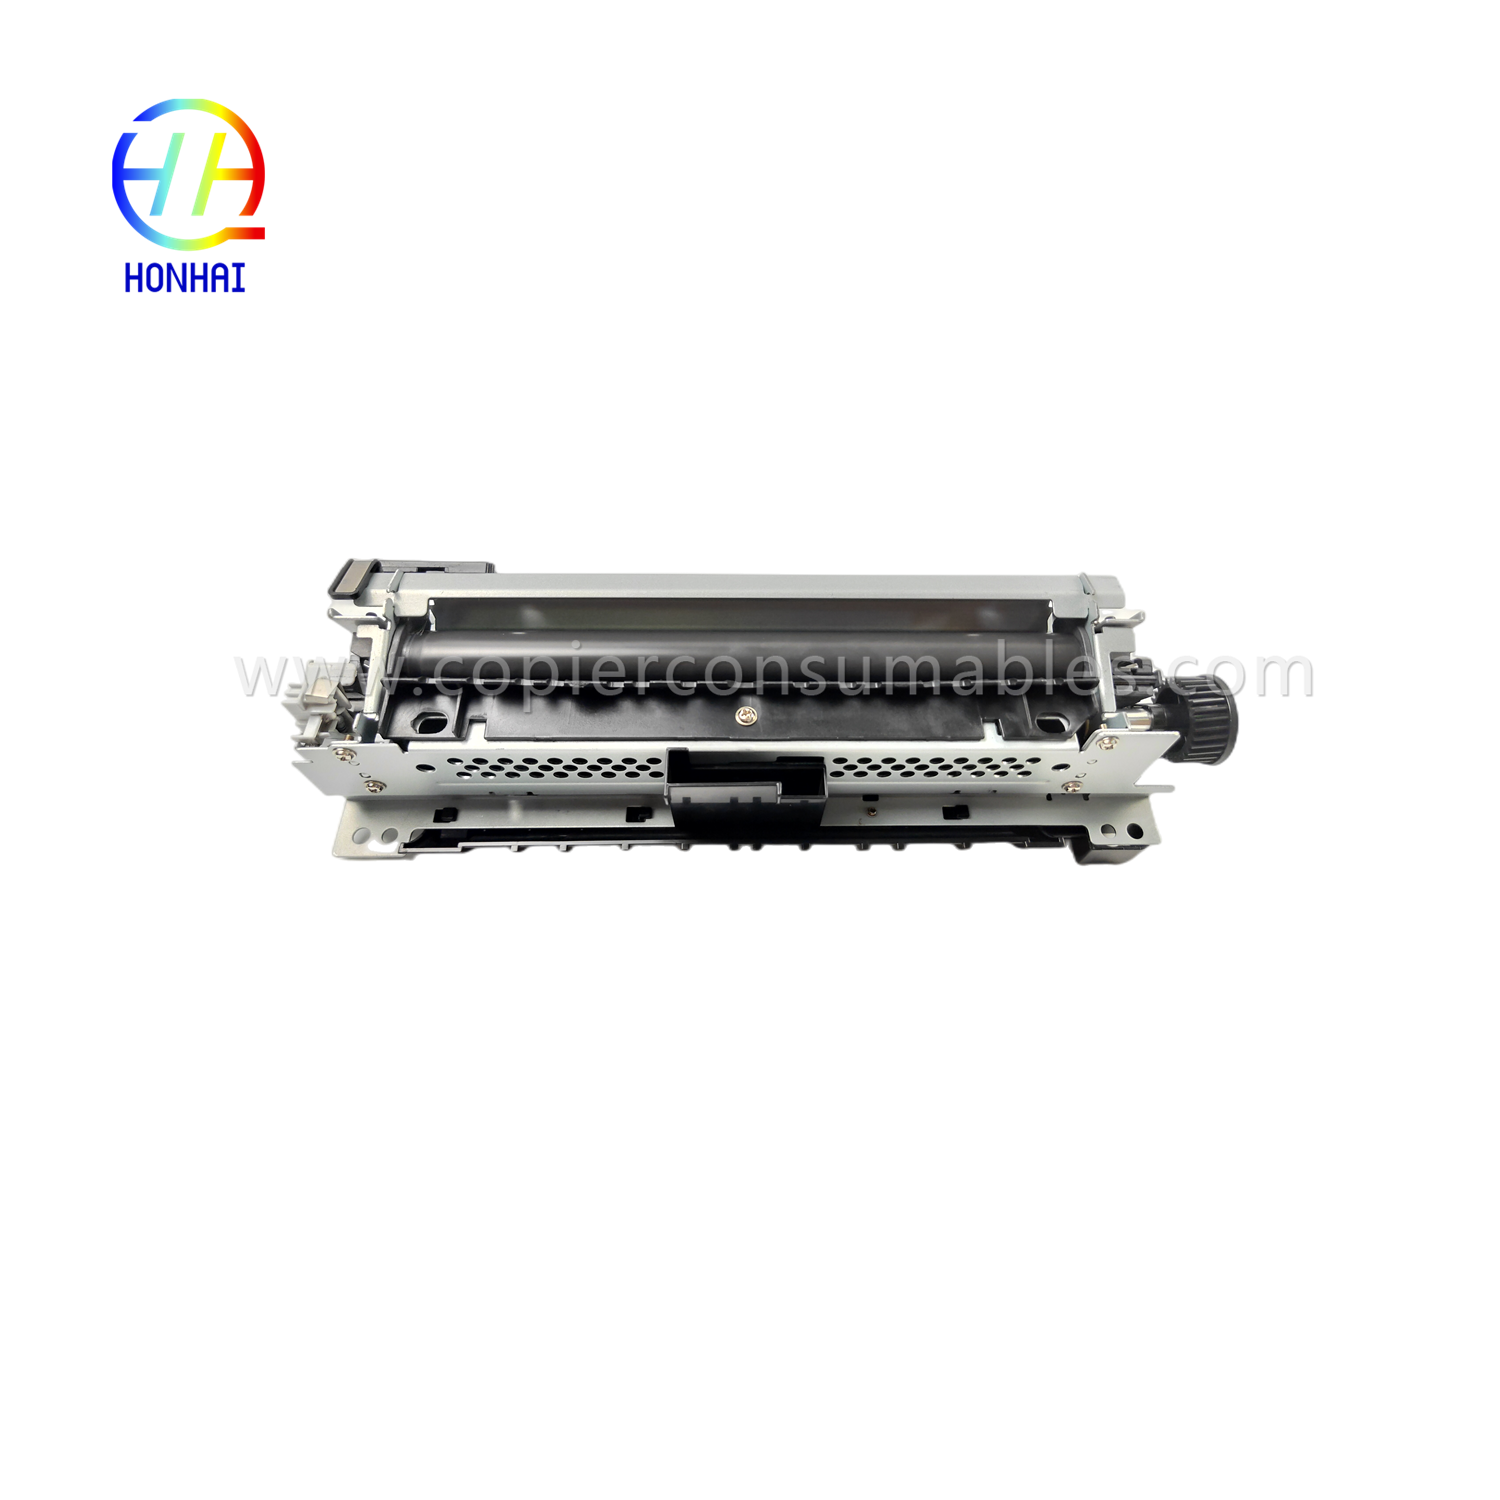 https://c585.goodao.net/fuser-assemble-220v-japan-for-hp-521-525-m521-m525-rm1-8508-rm1-8508-000-fuser-unit-product/